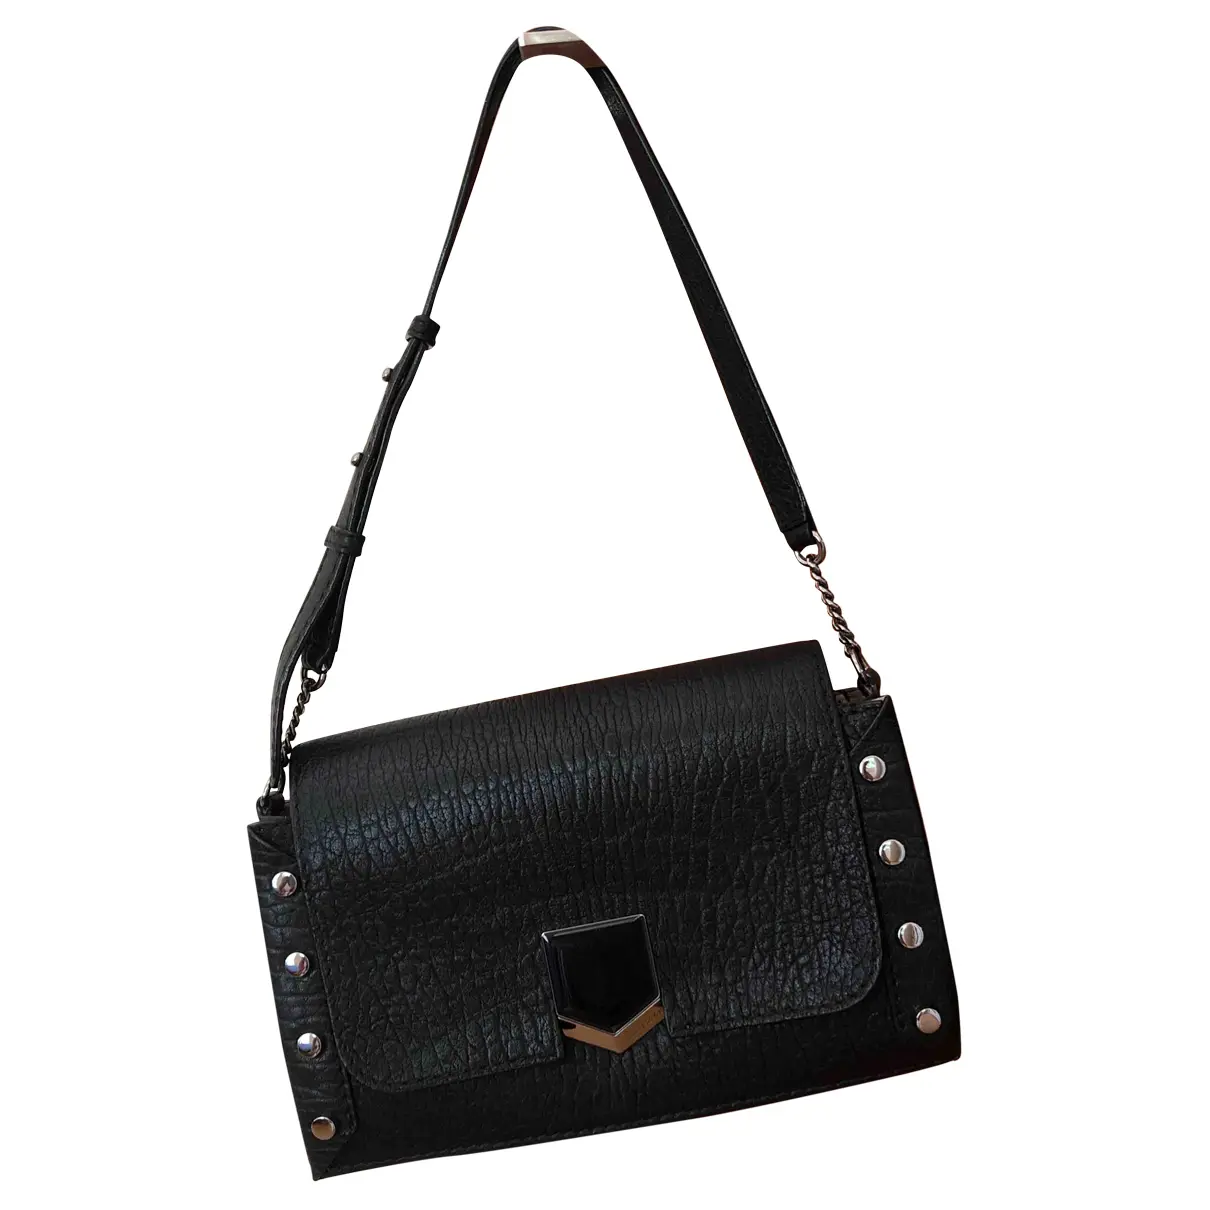 Lockett leather handbag Jimmy Choo